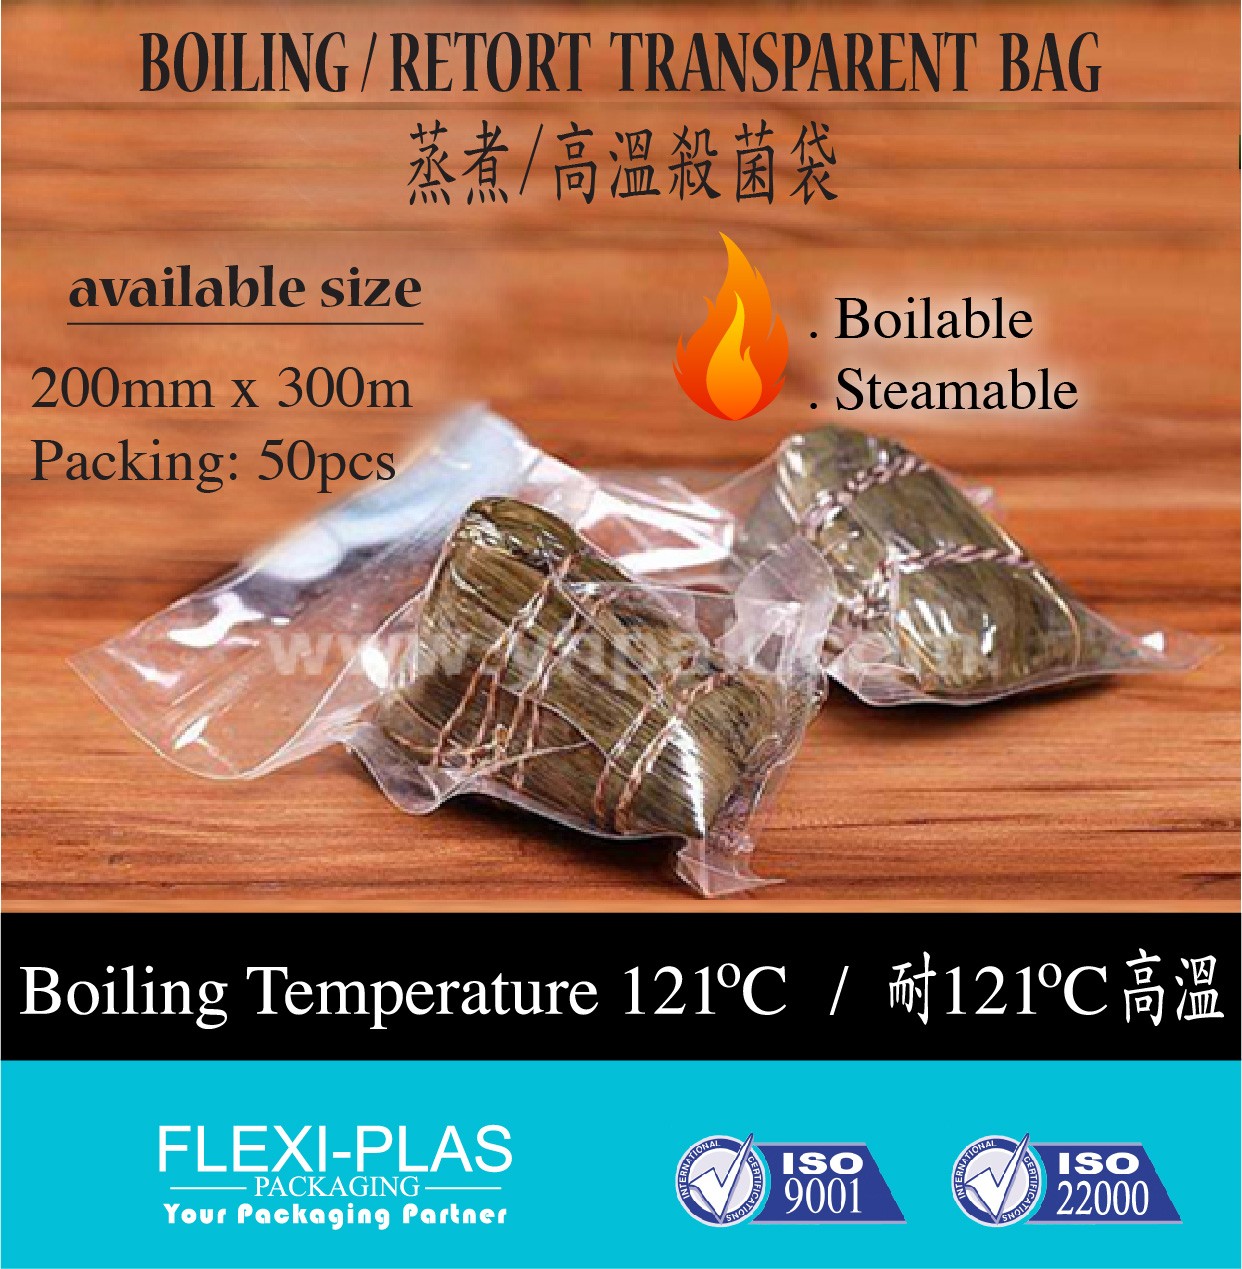 Boiling / Retort Transparent Bag